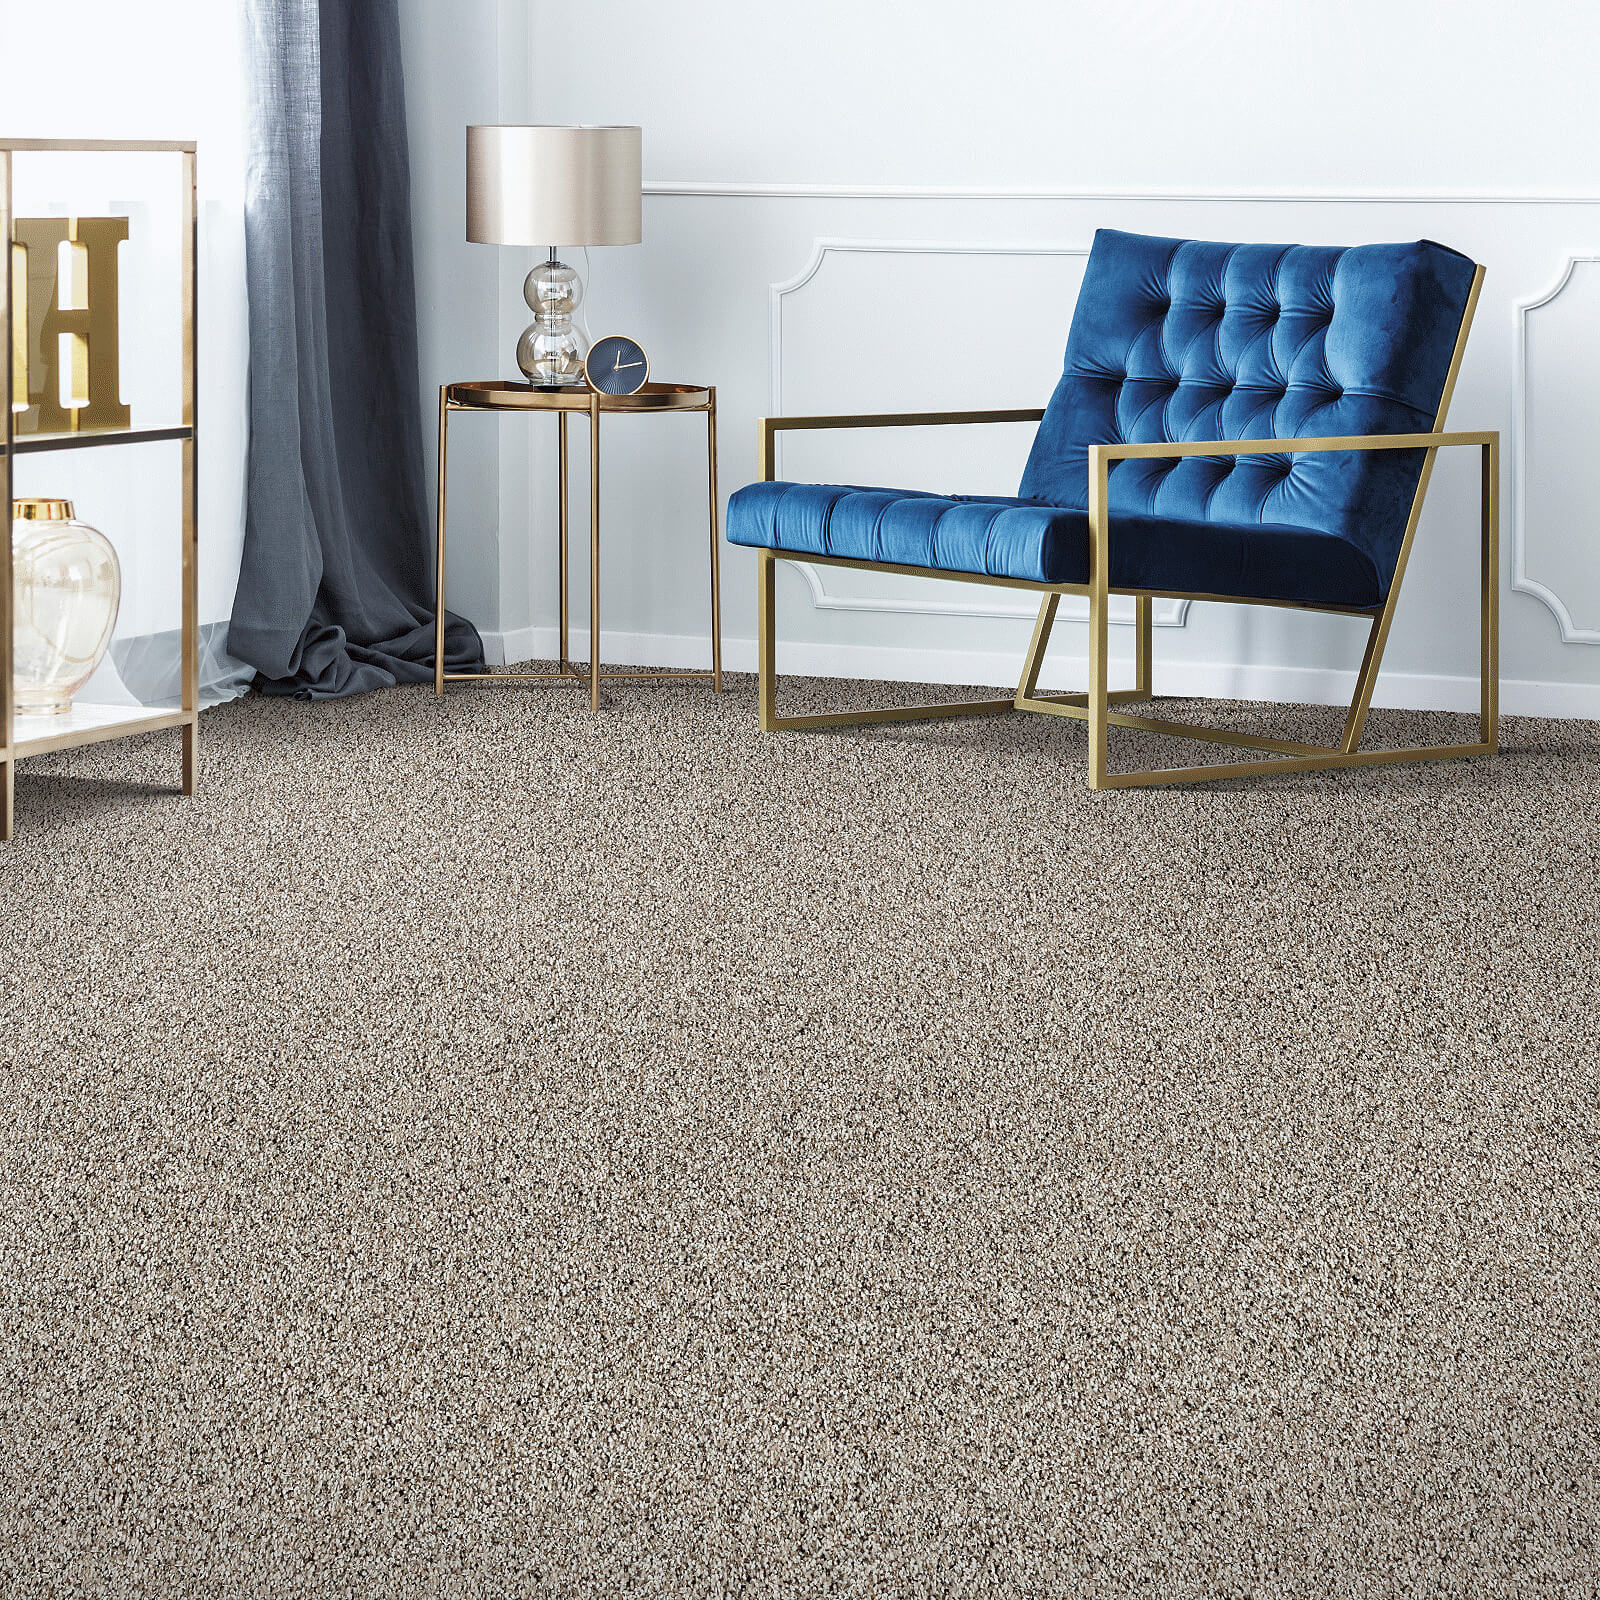 Blue chair on Carpet | Rich's Modern Flooring